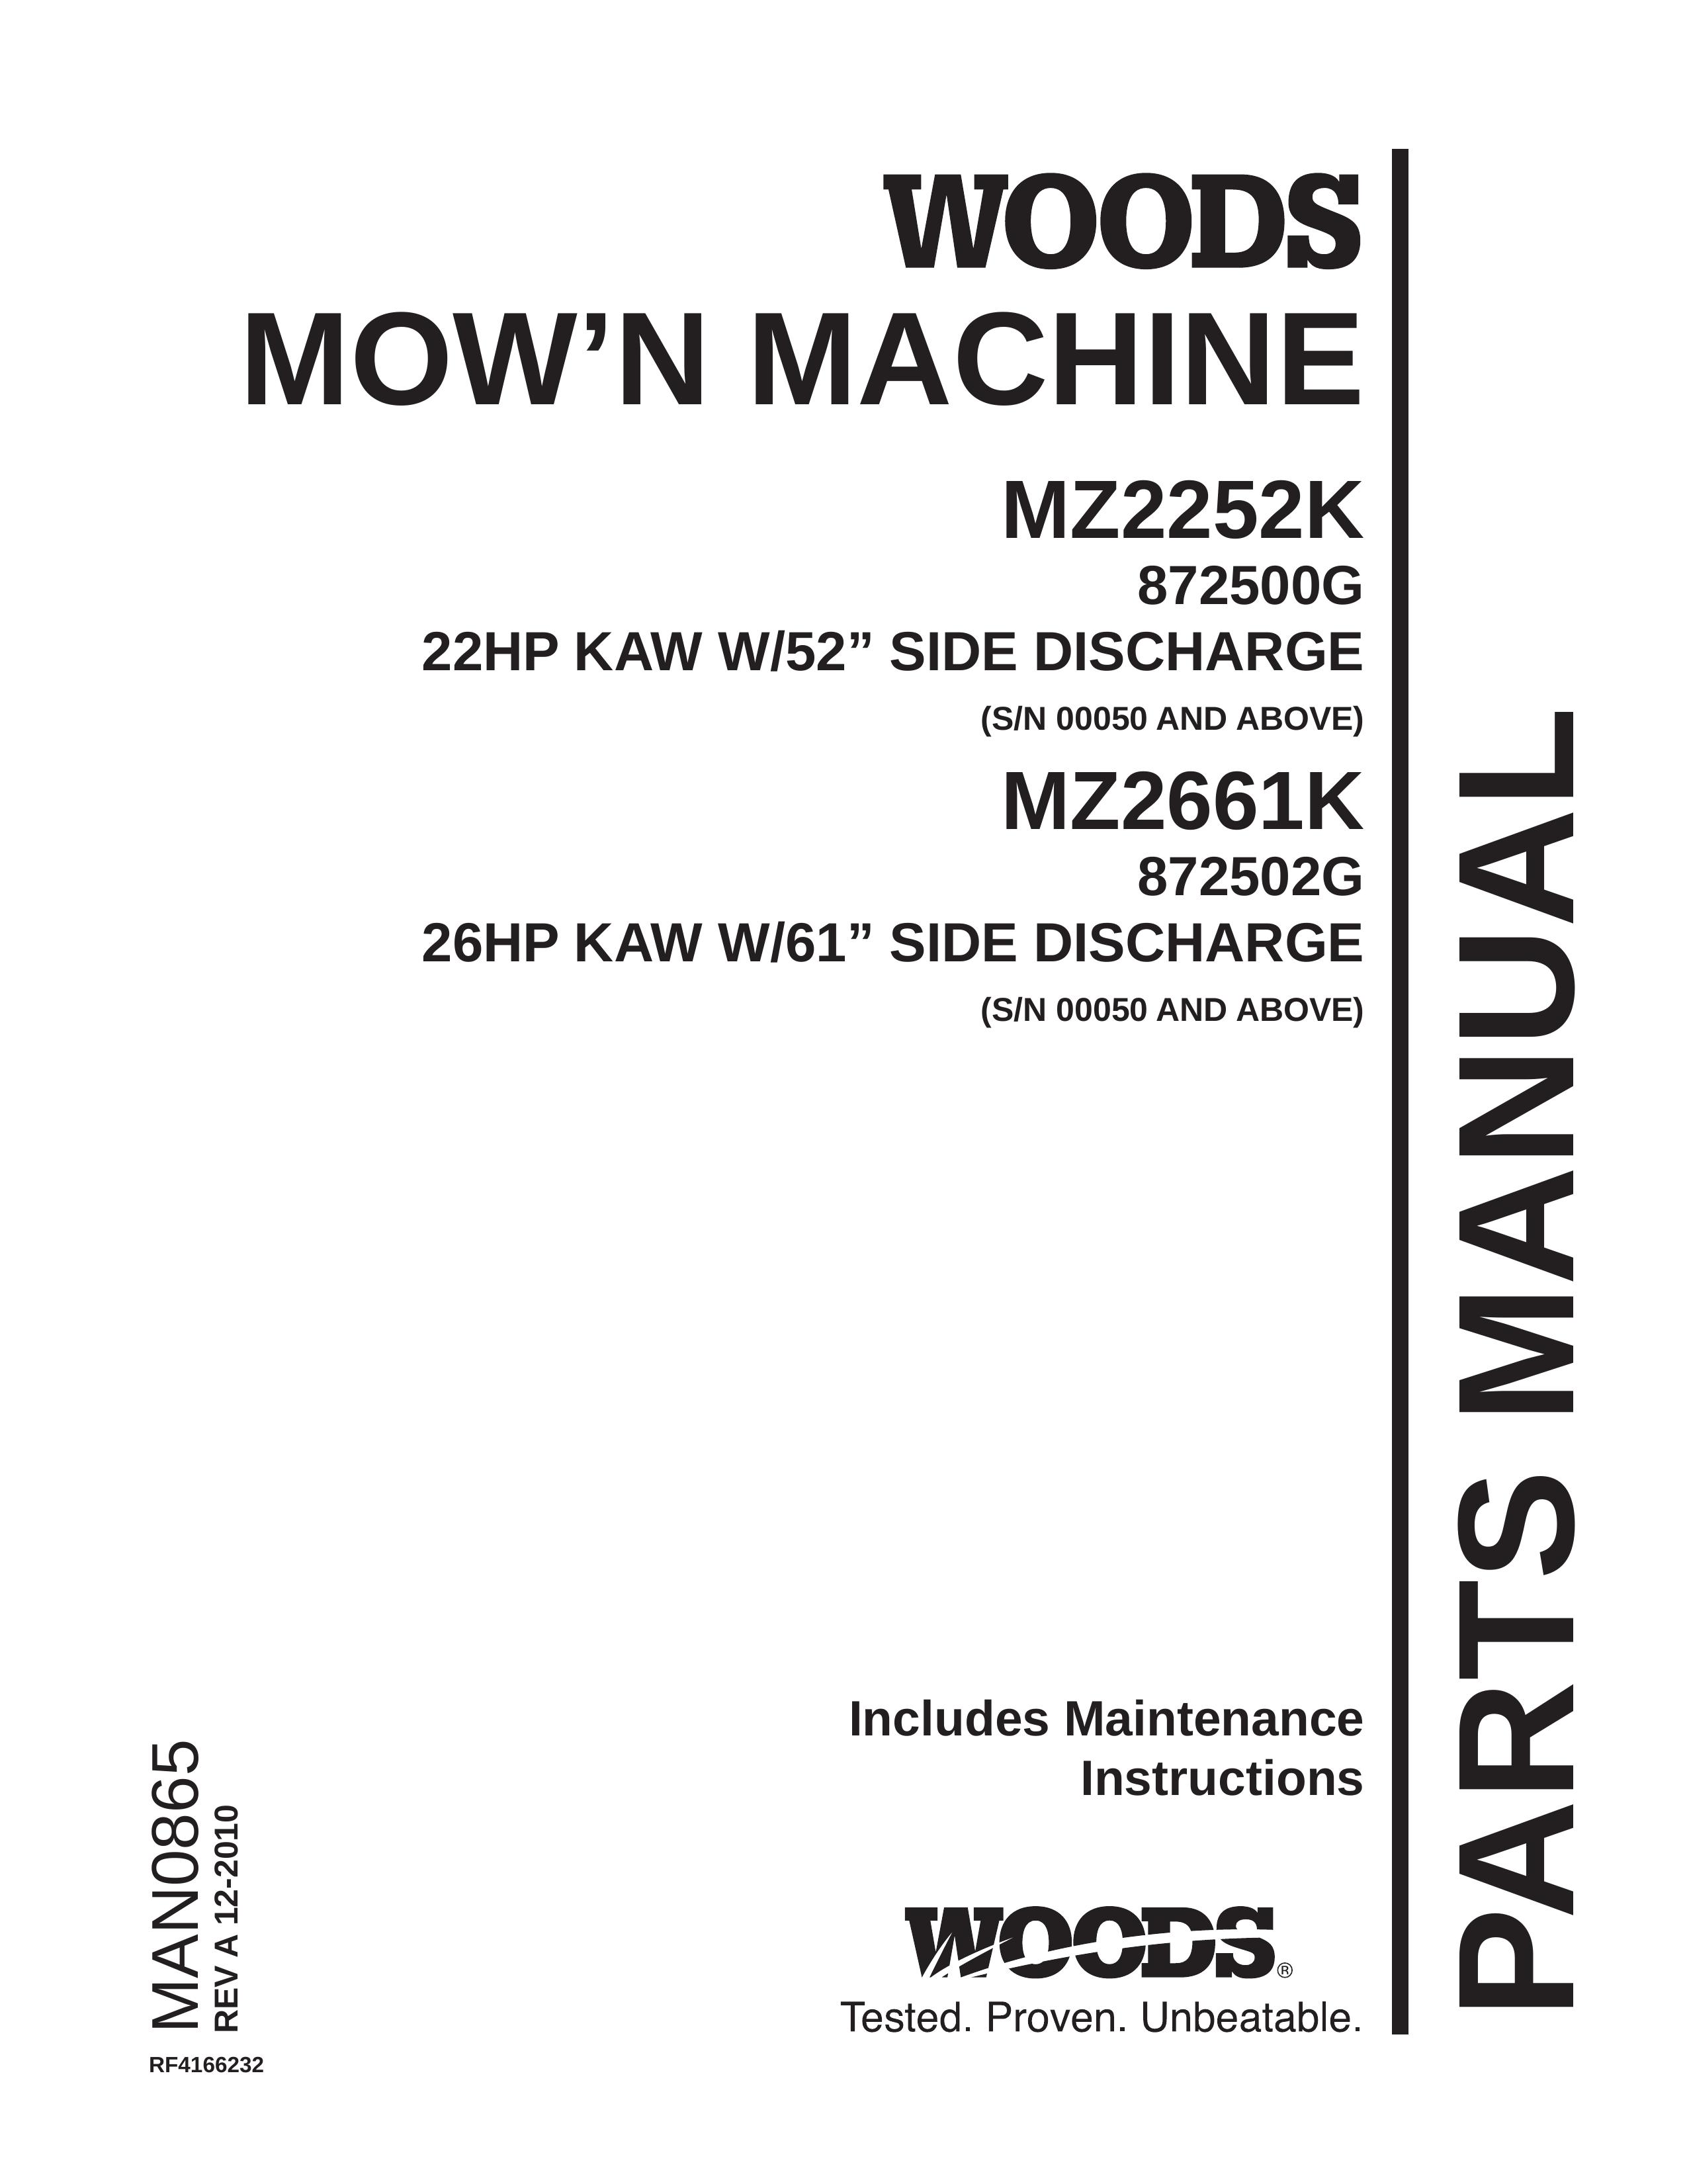 Woods Equipment 872502G Lawn Mower User Manual